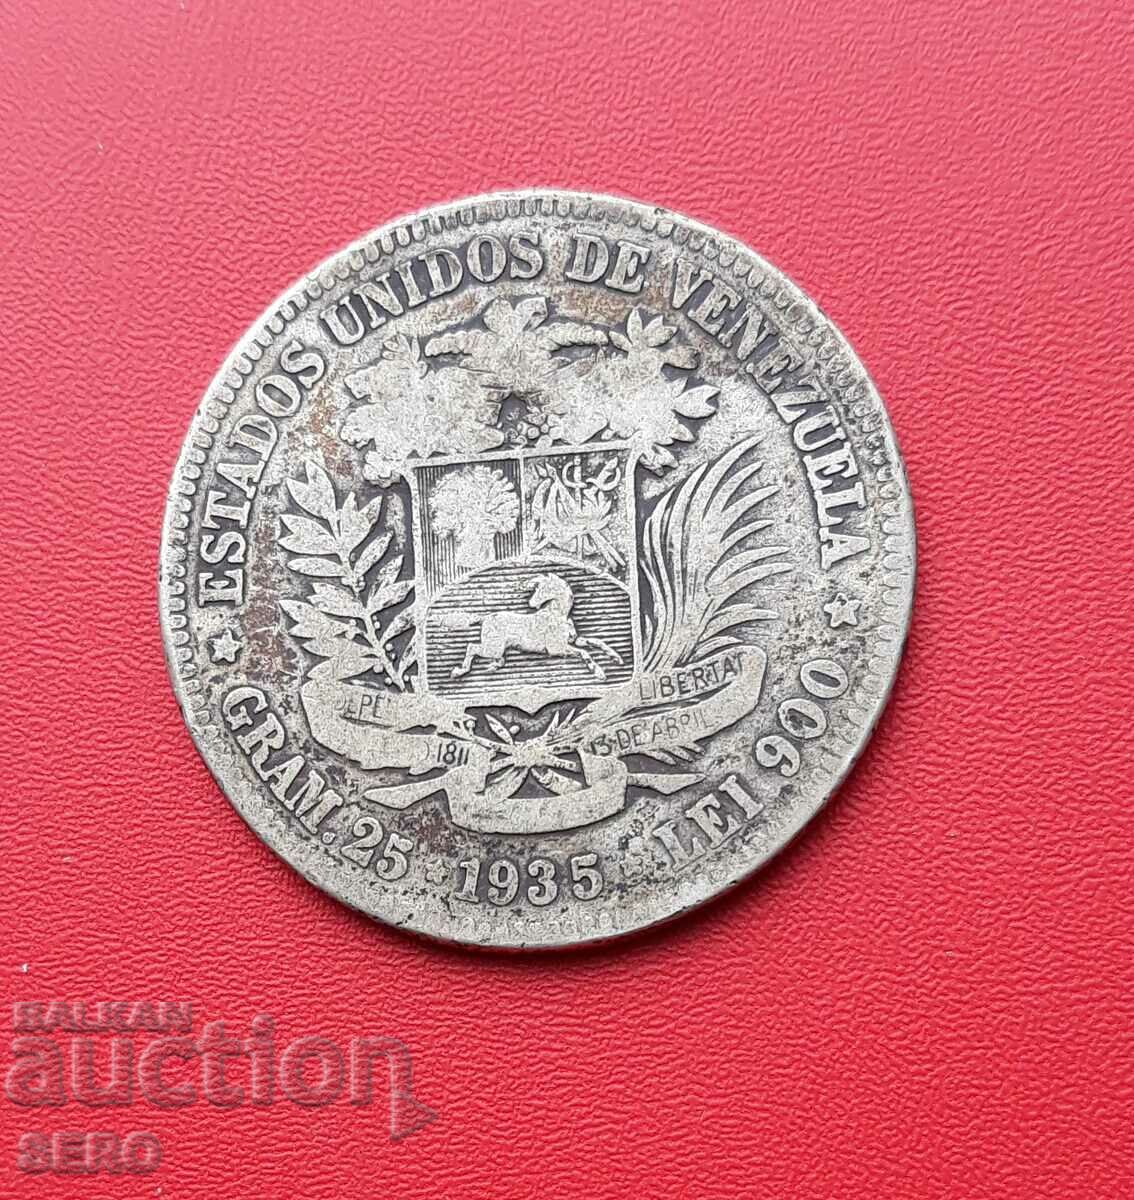 Venezuela-5 bolivars 1935-silver-proof 900